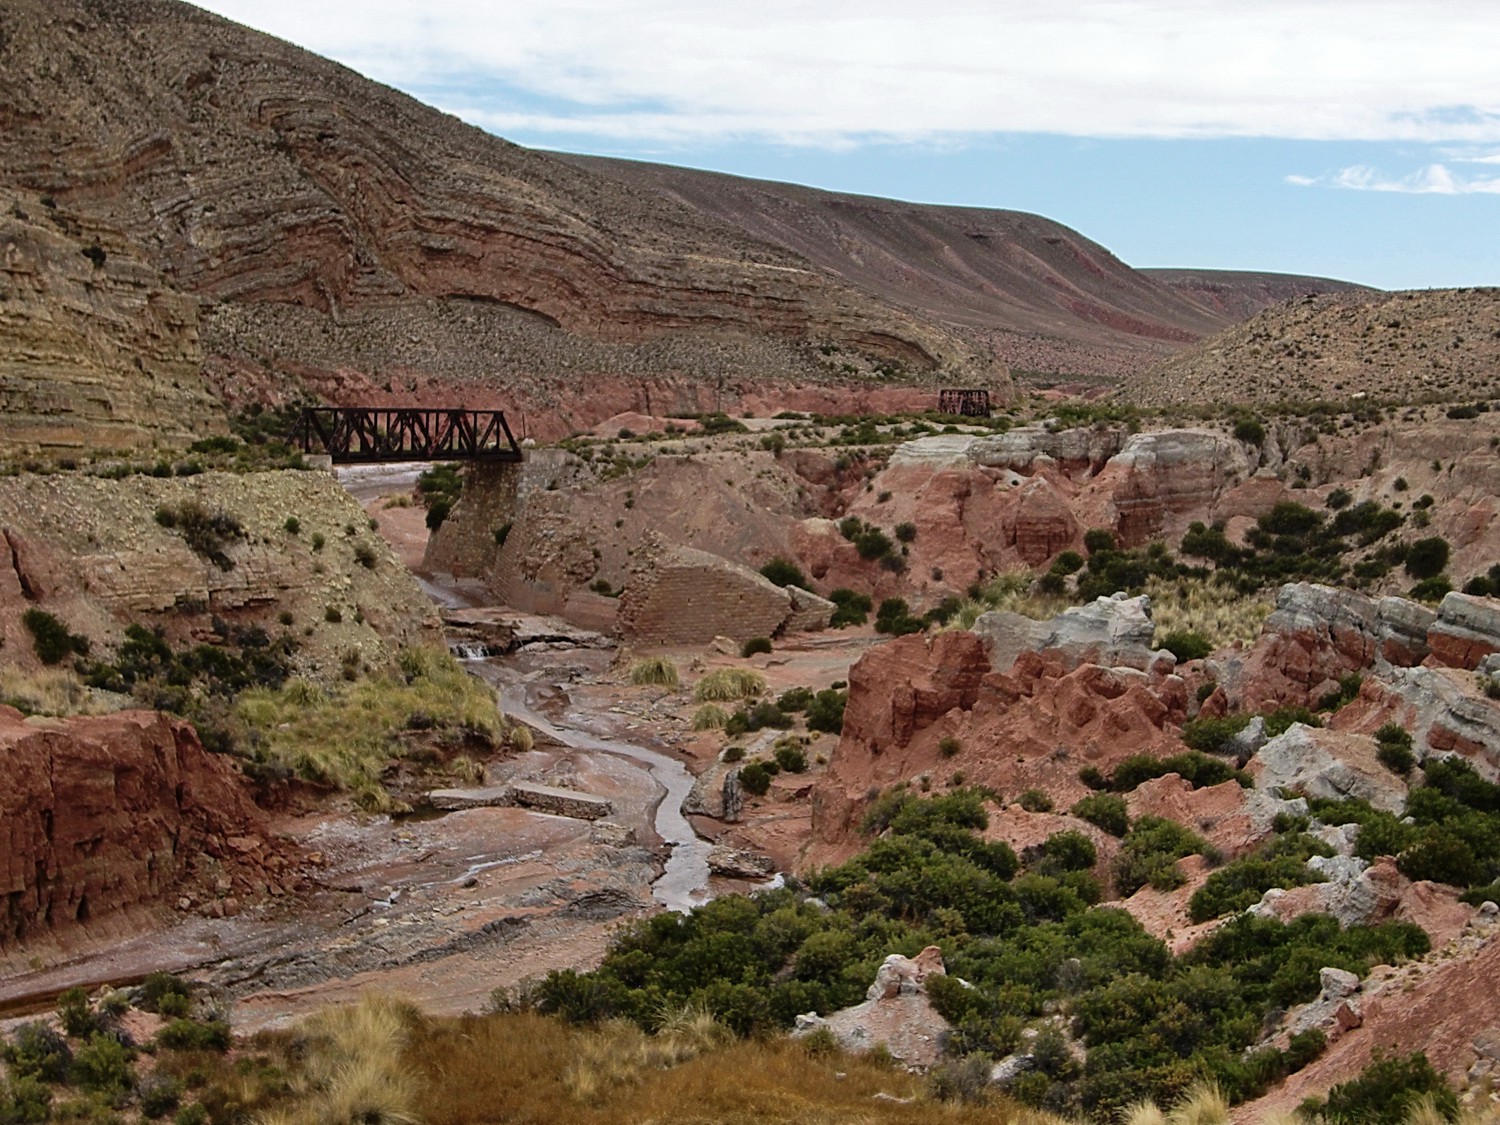 Landscape of the Quebrada de Humahuaca closed to the Bolivan border